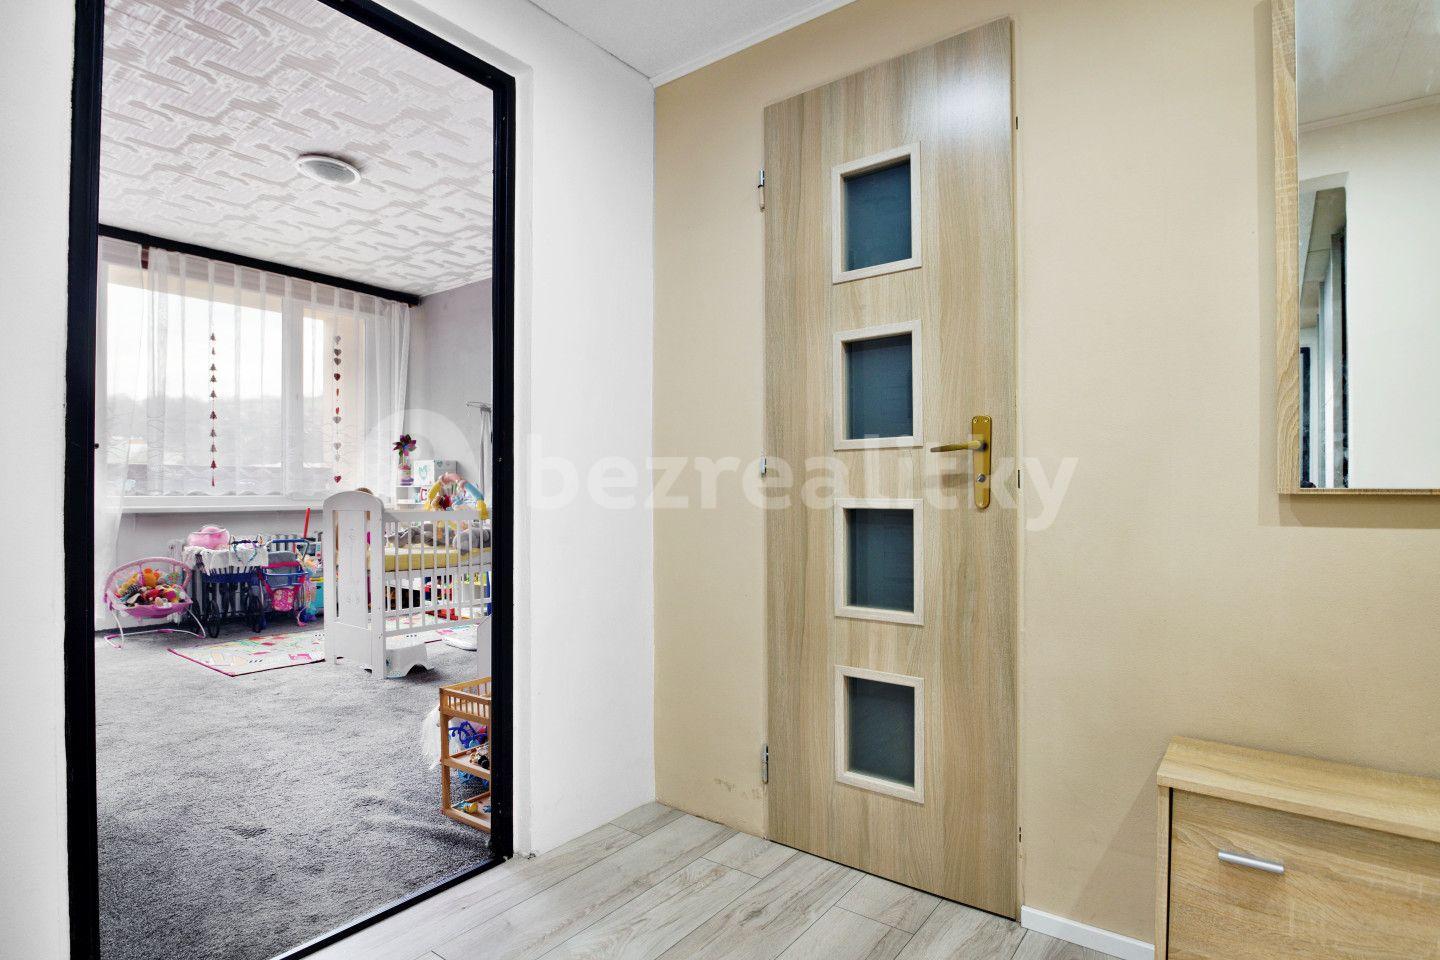 3 bedroom flat for sale, 76 m², Sibiřská, Ústí nad Labem, Ústecký Region